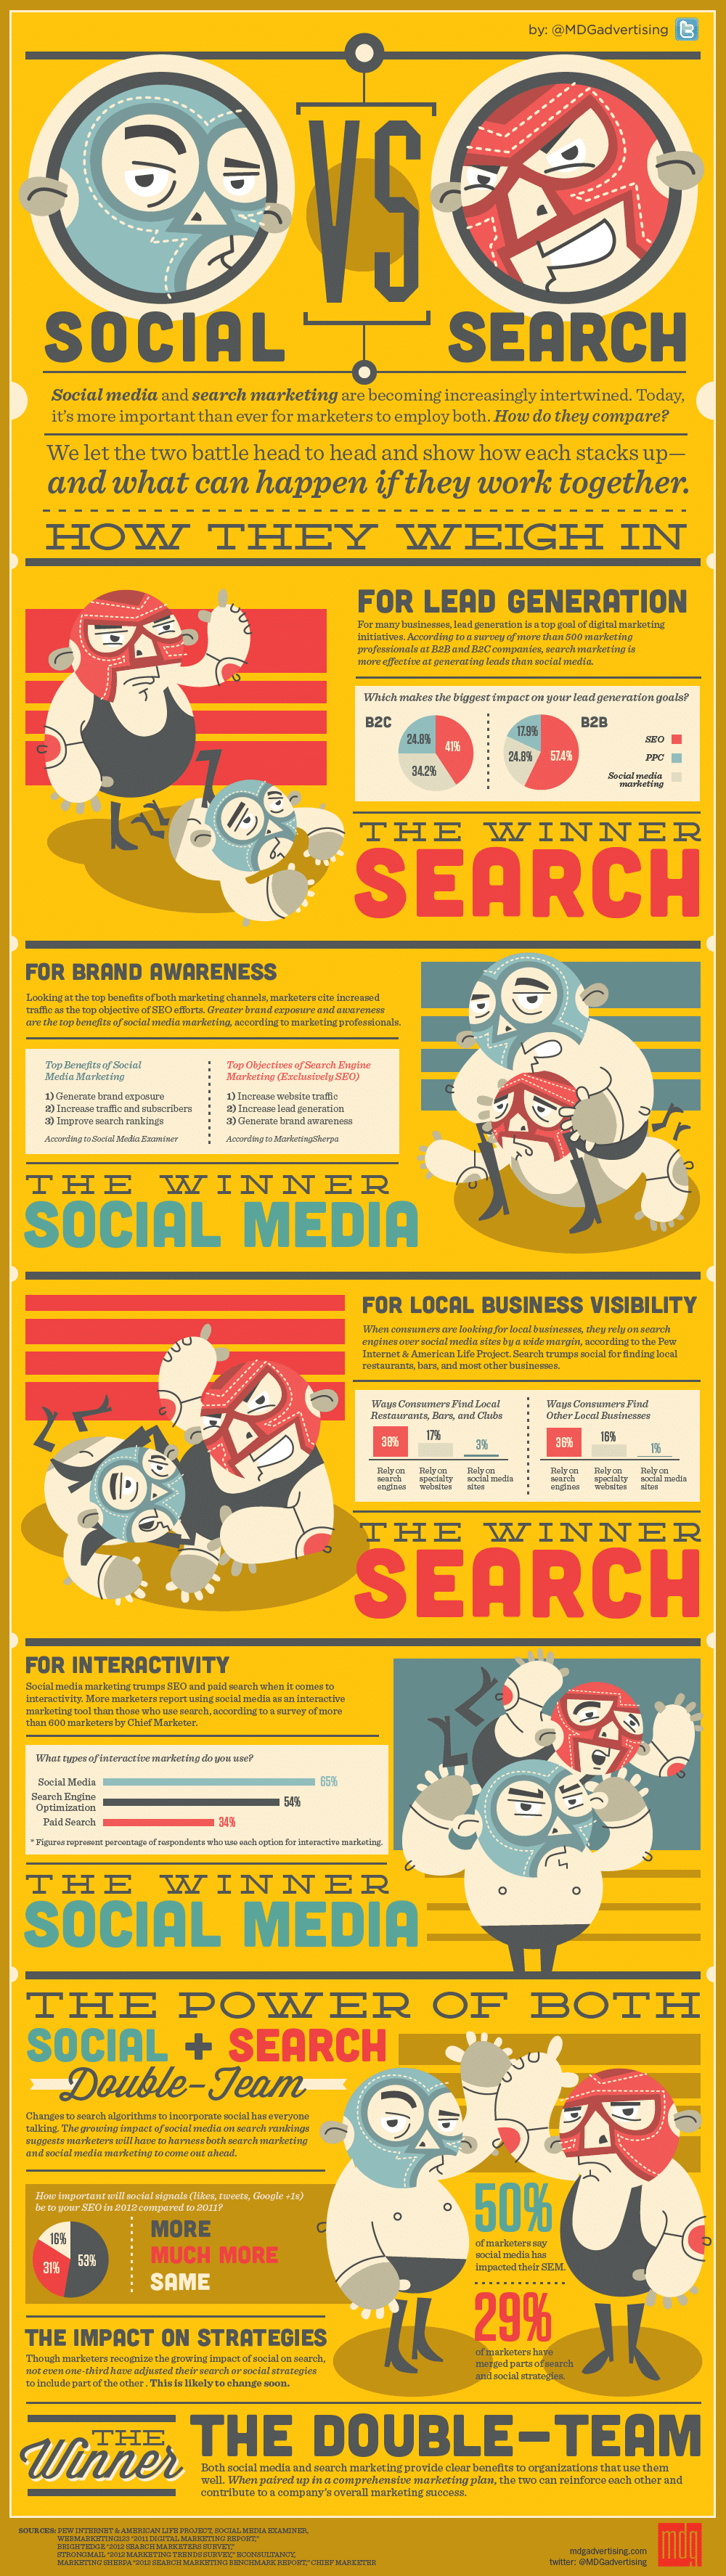 social-vs-search-marketing